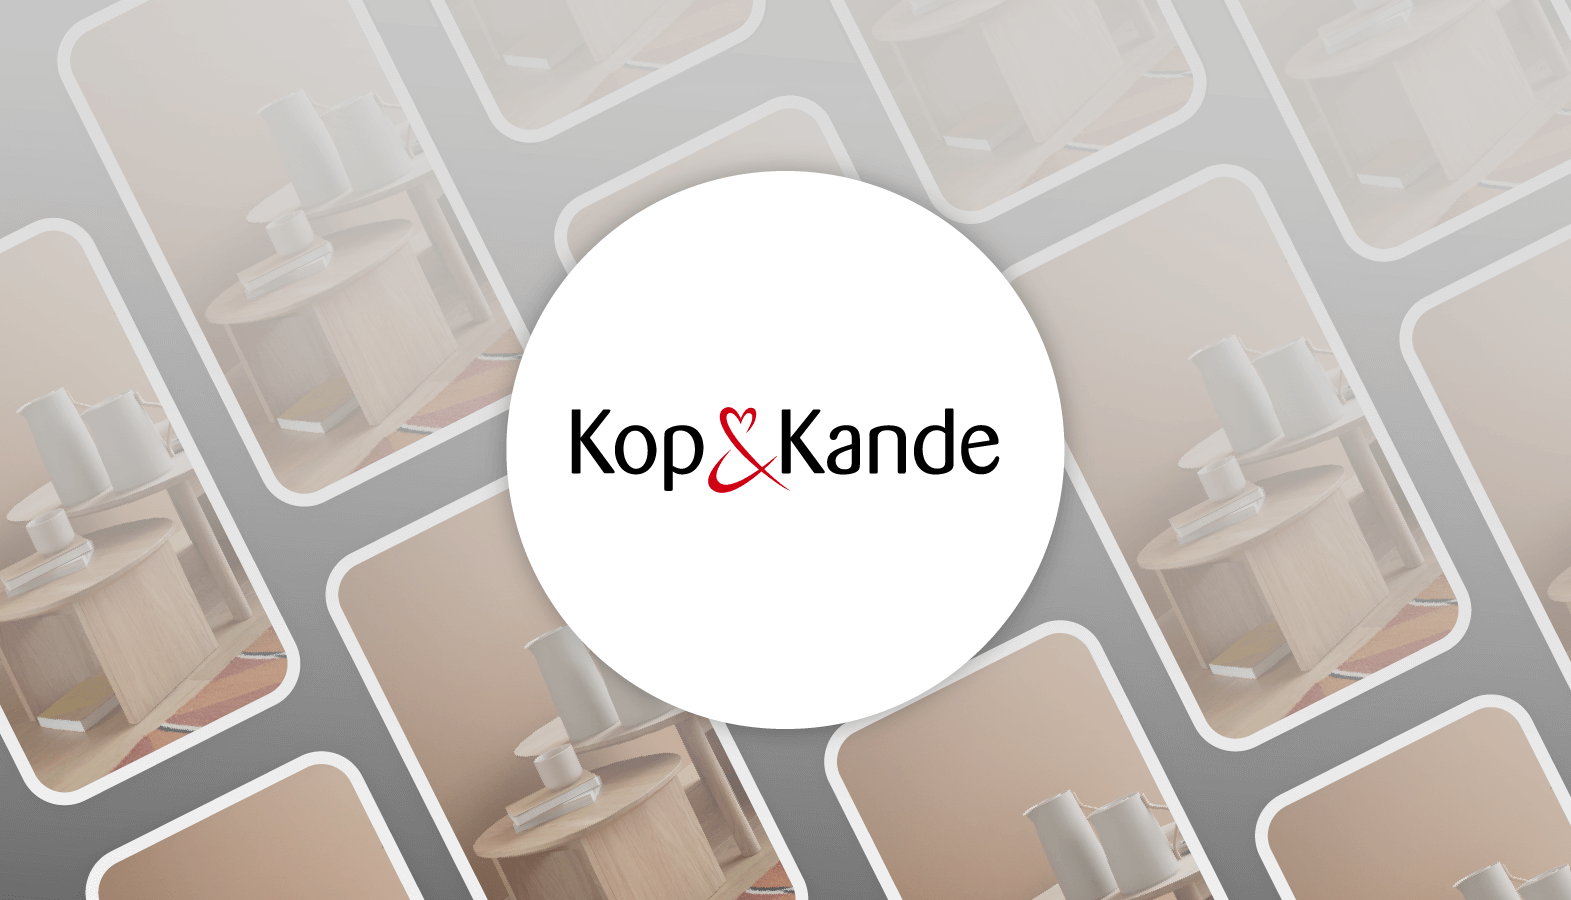 Kop & Kande Customer Story with Playable